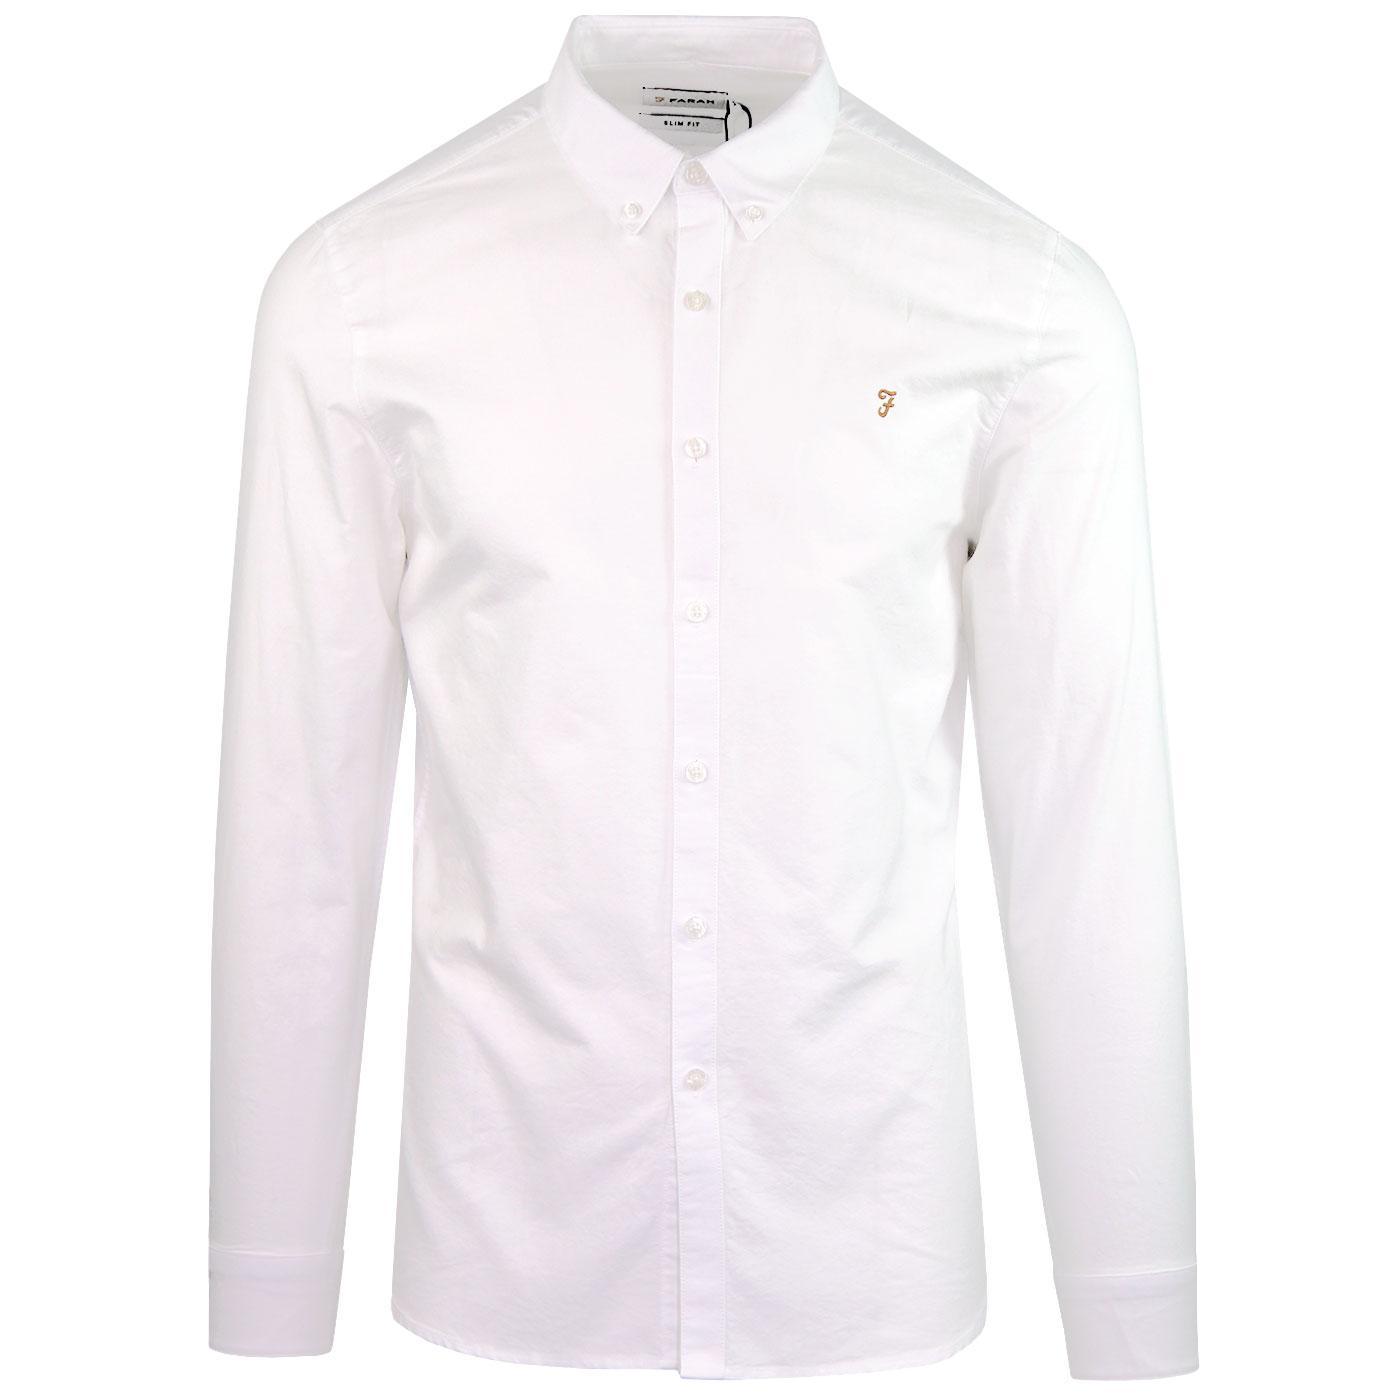 FARAH VINTAGE Brewer Retro Mod Button Down Oxford Shirt White